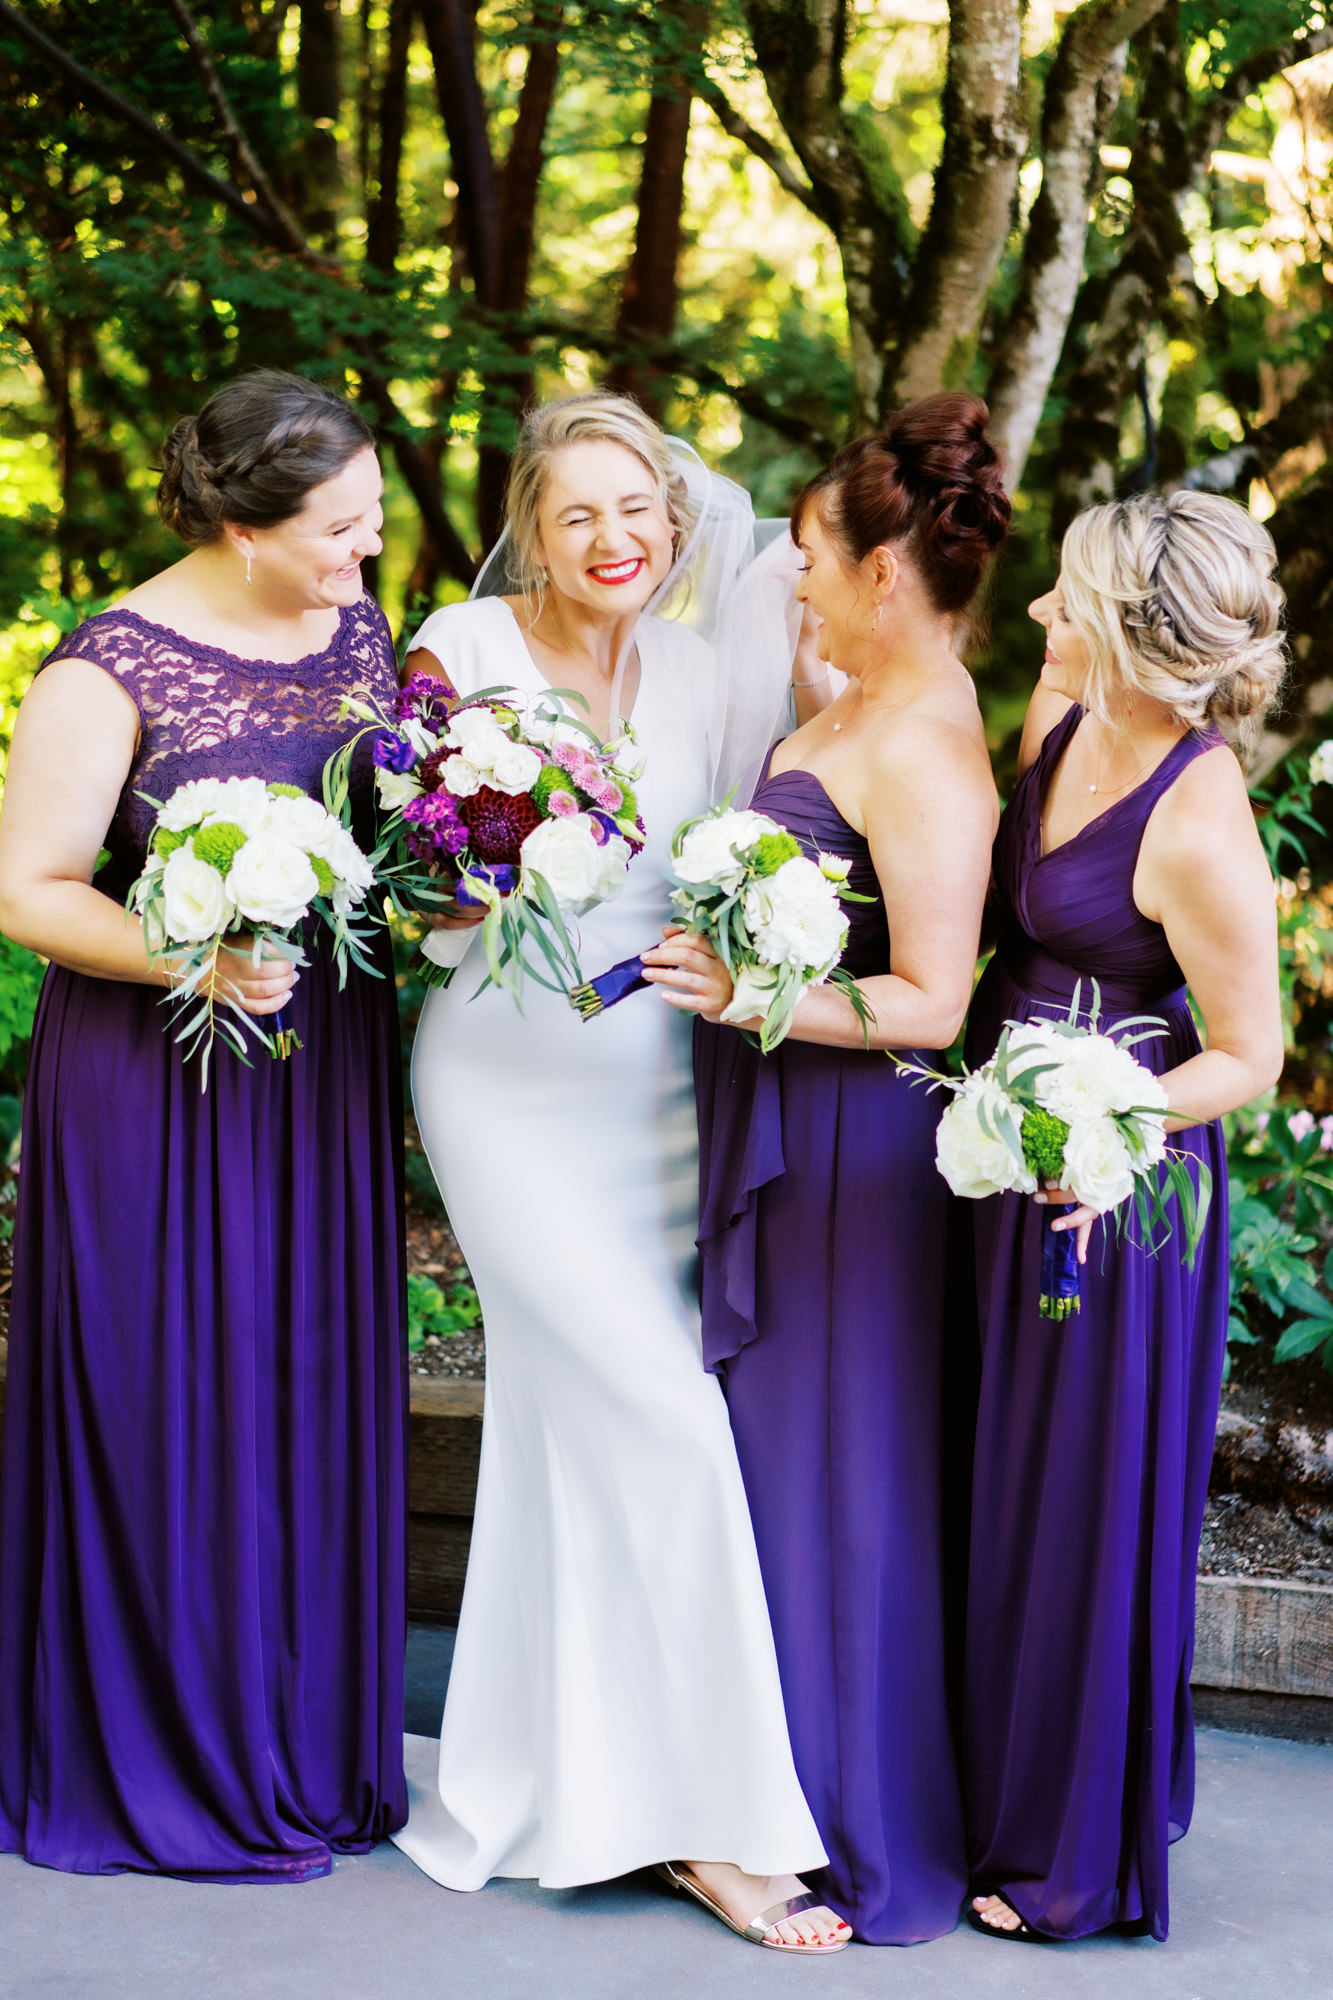 Seattle wedding photographer Jenn Tai: Kayley and her bridesmaids at JM Cellars